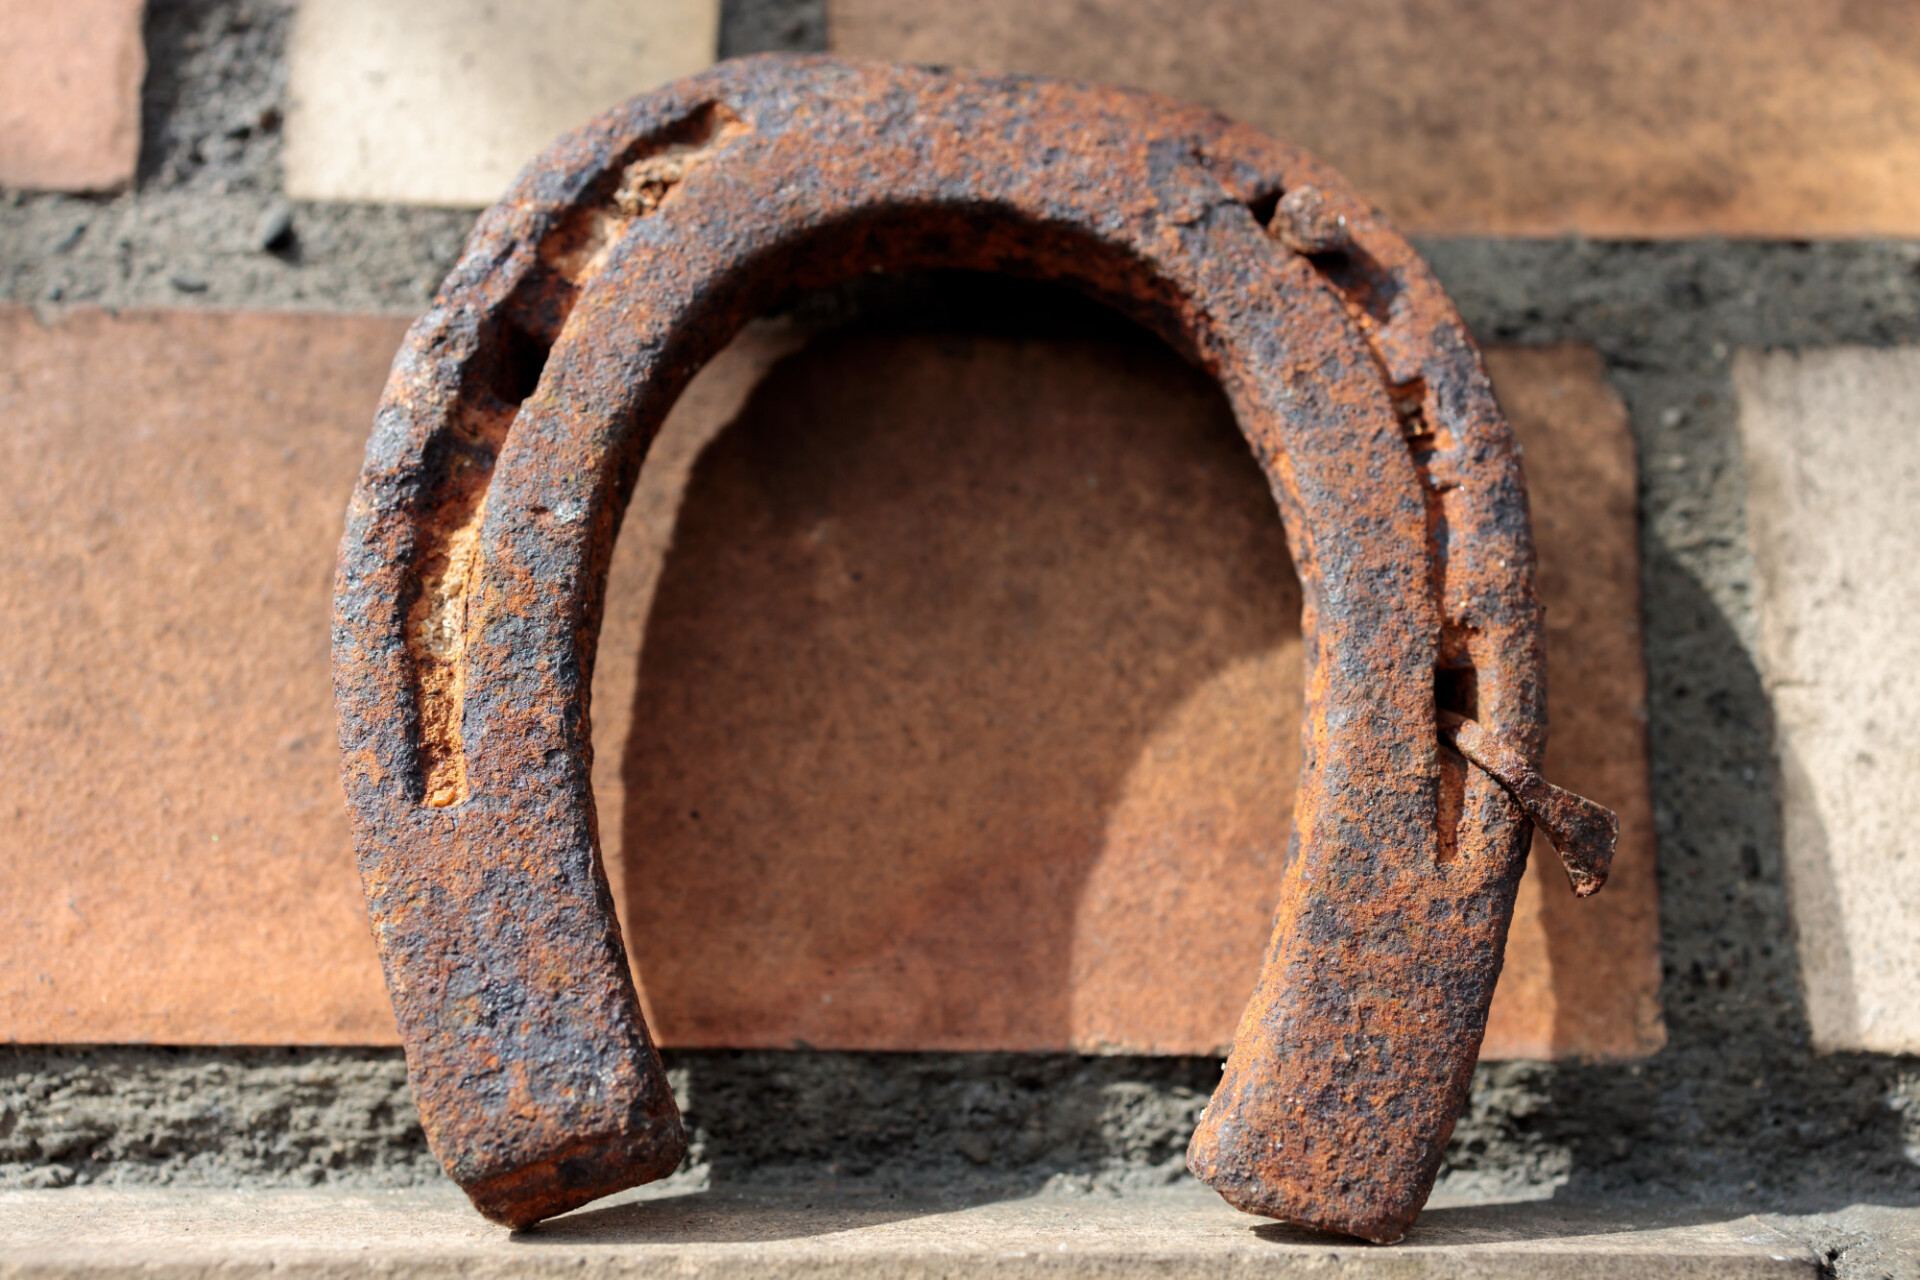 Rusty horseshoe